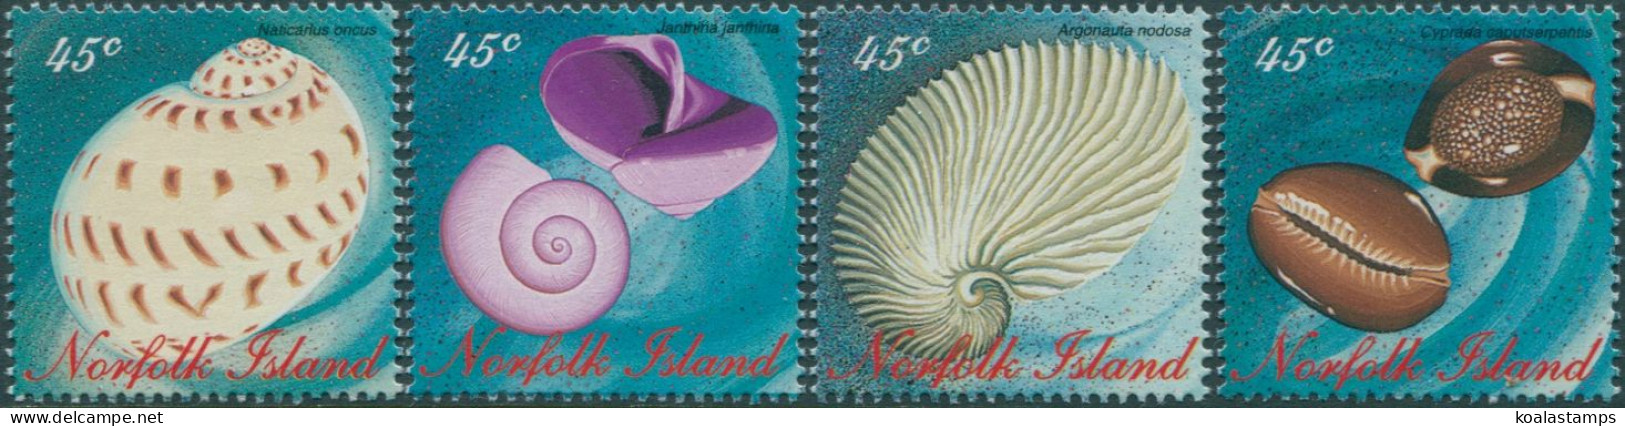 Norfolk Island 1996 SG620-623 Shells Set MNH - Norfolkinsel